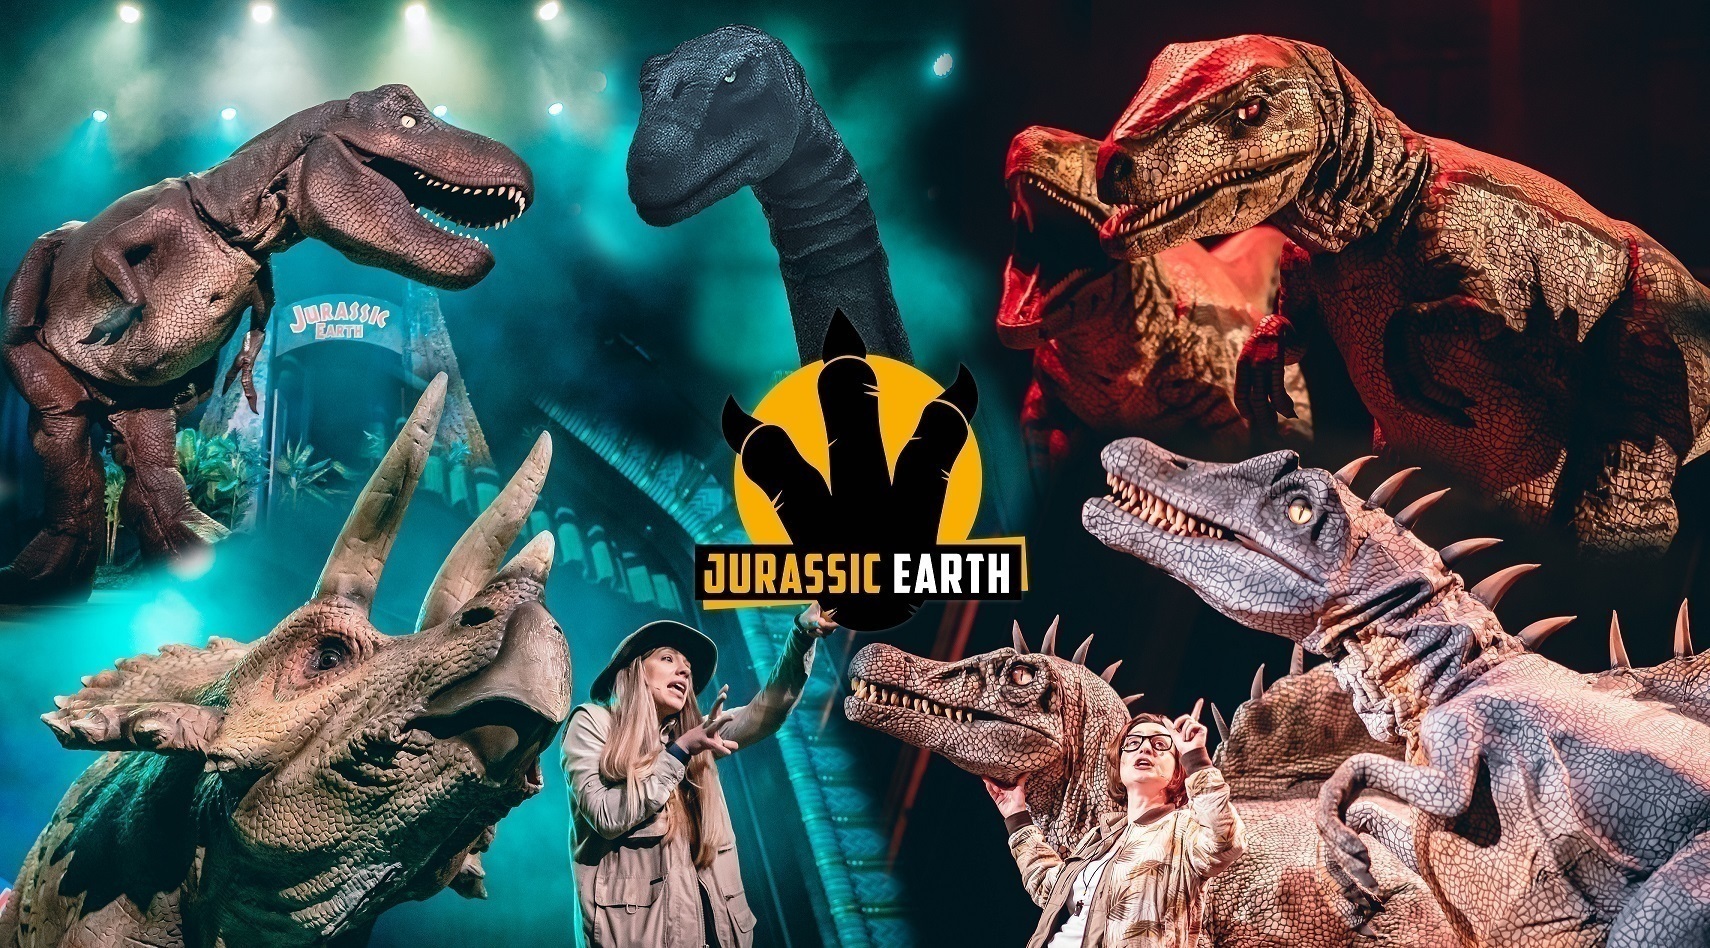 Jurassic Earth Live Dinosaur Theatre Show - Pavilion Theatre Rhyl North Wales - Weds 2nd November 22, Rhyl, Wales, United Kingdom